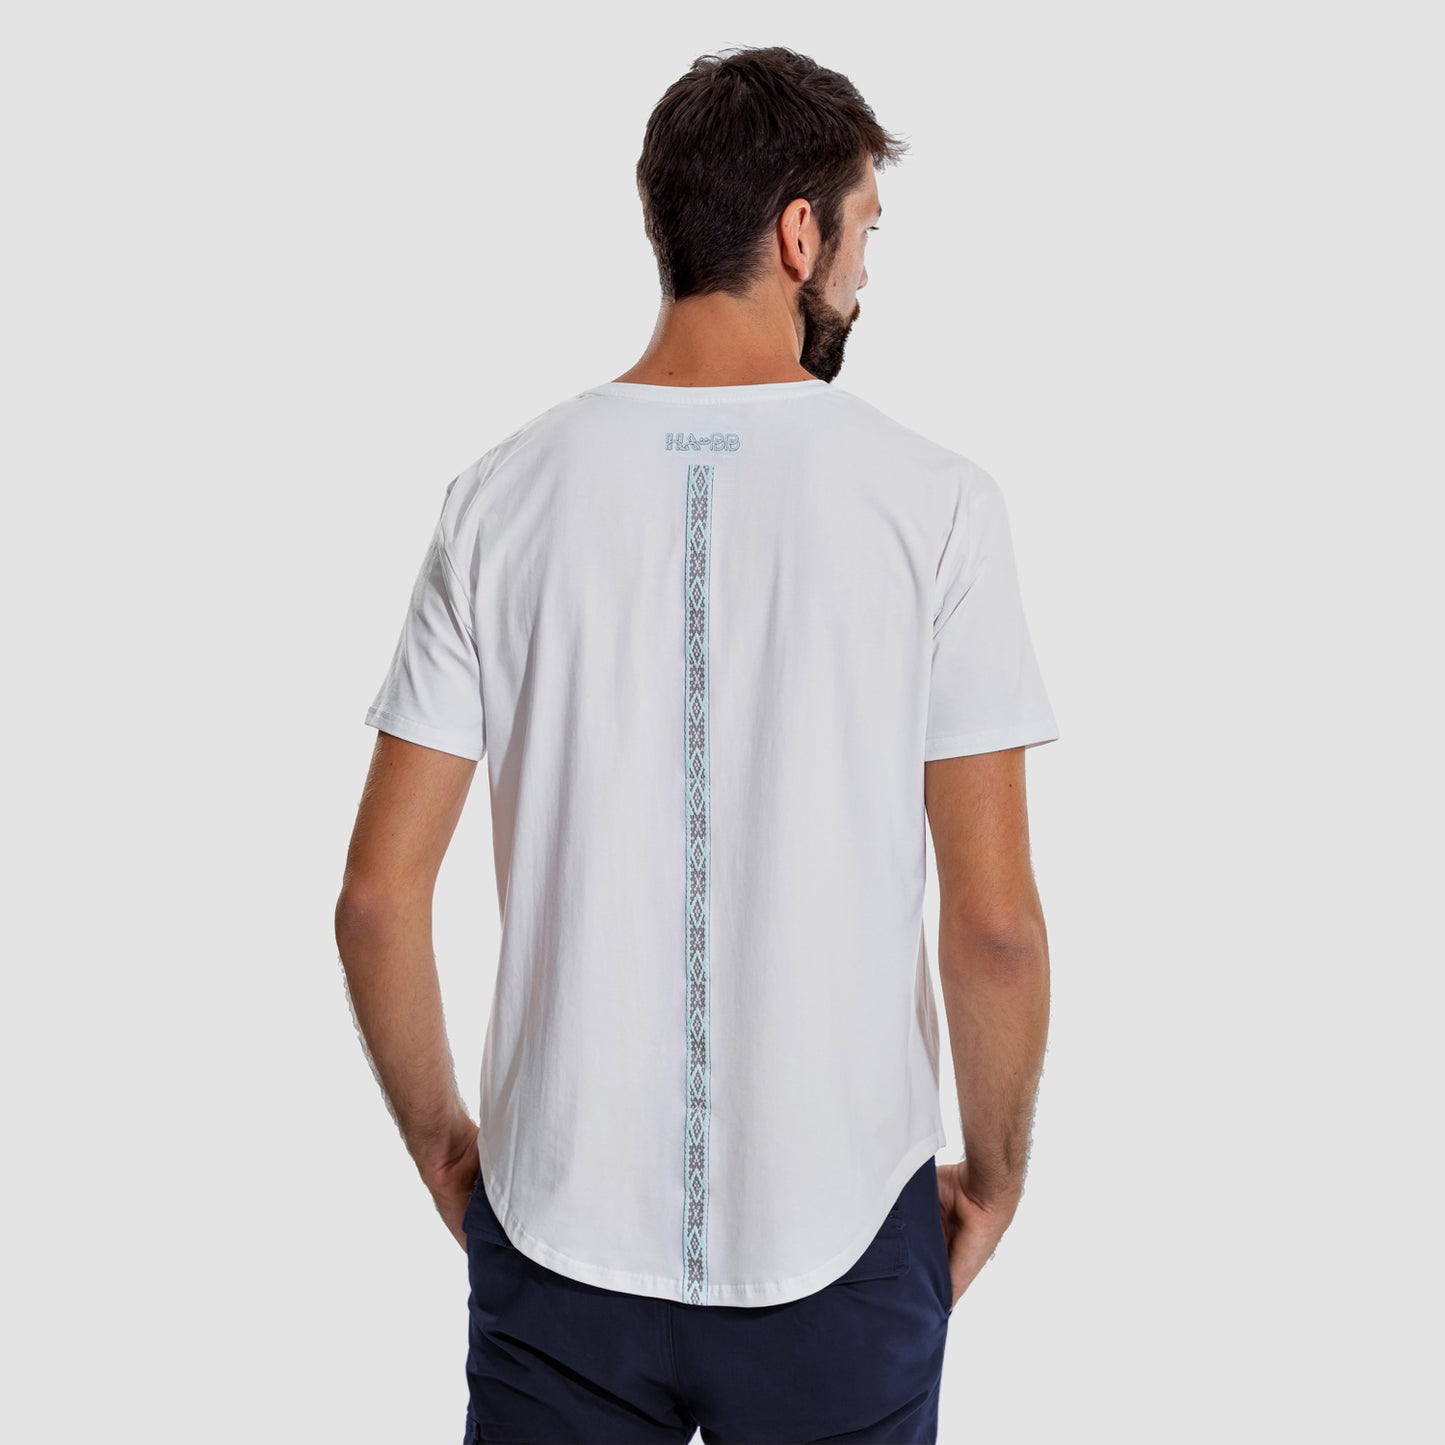 White T-shirt, front pocket, short sleeves, Al Sadu, Print, rounded bottom, modern, Man, back view, model